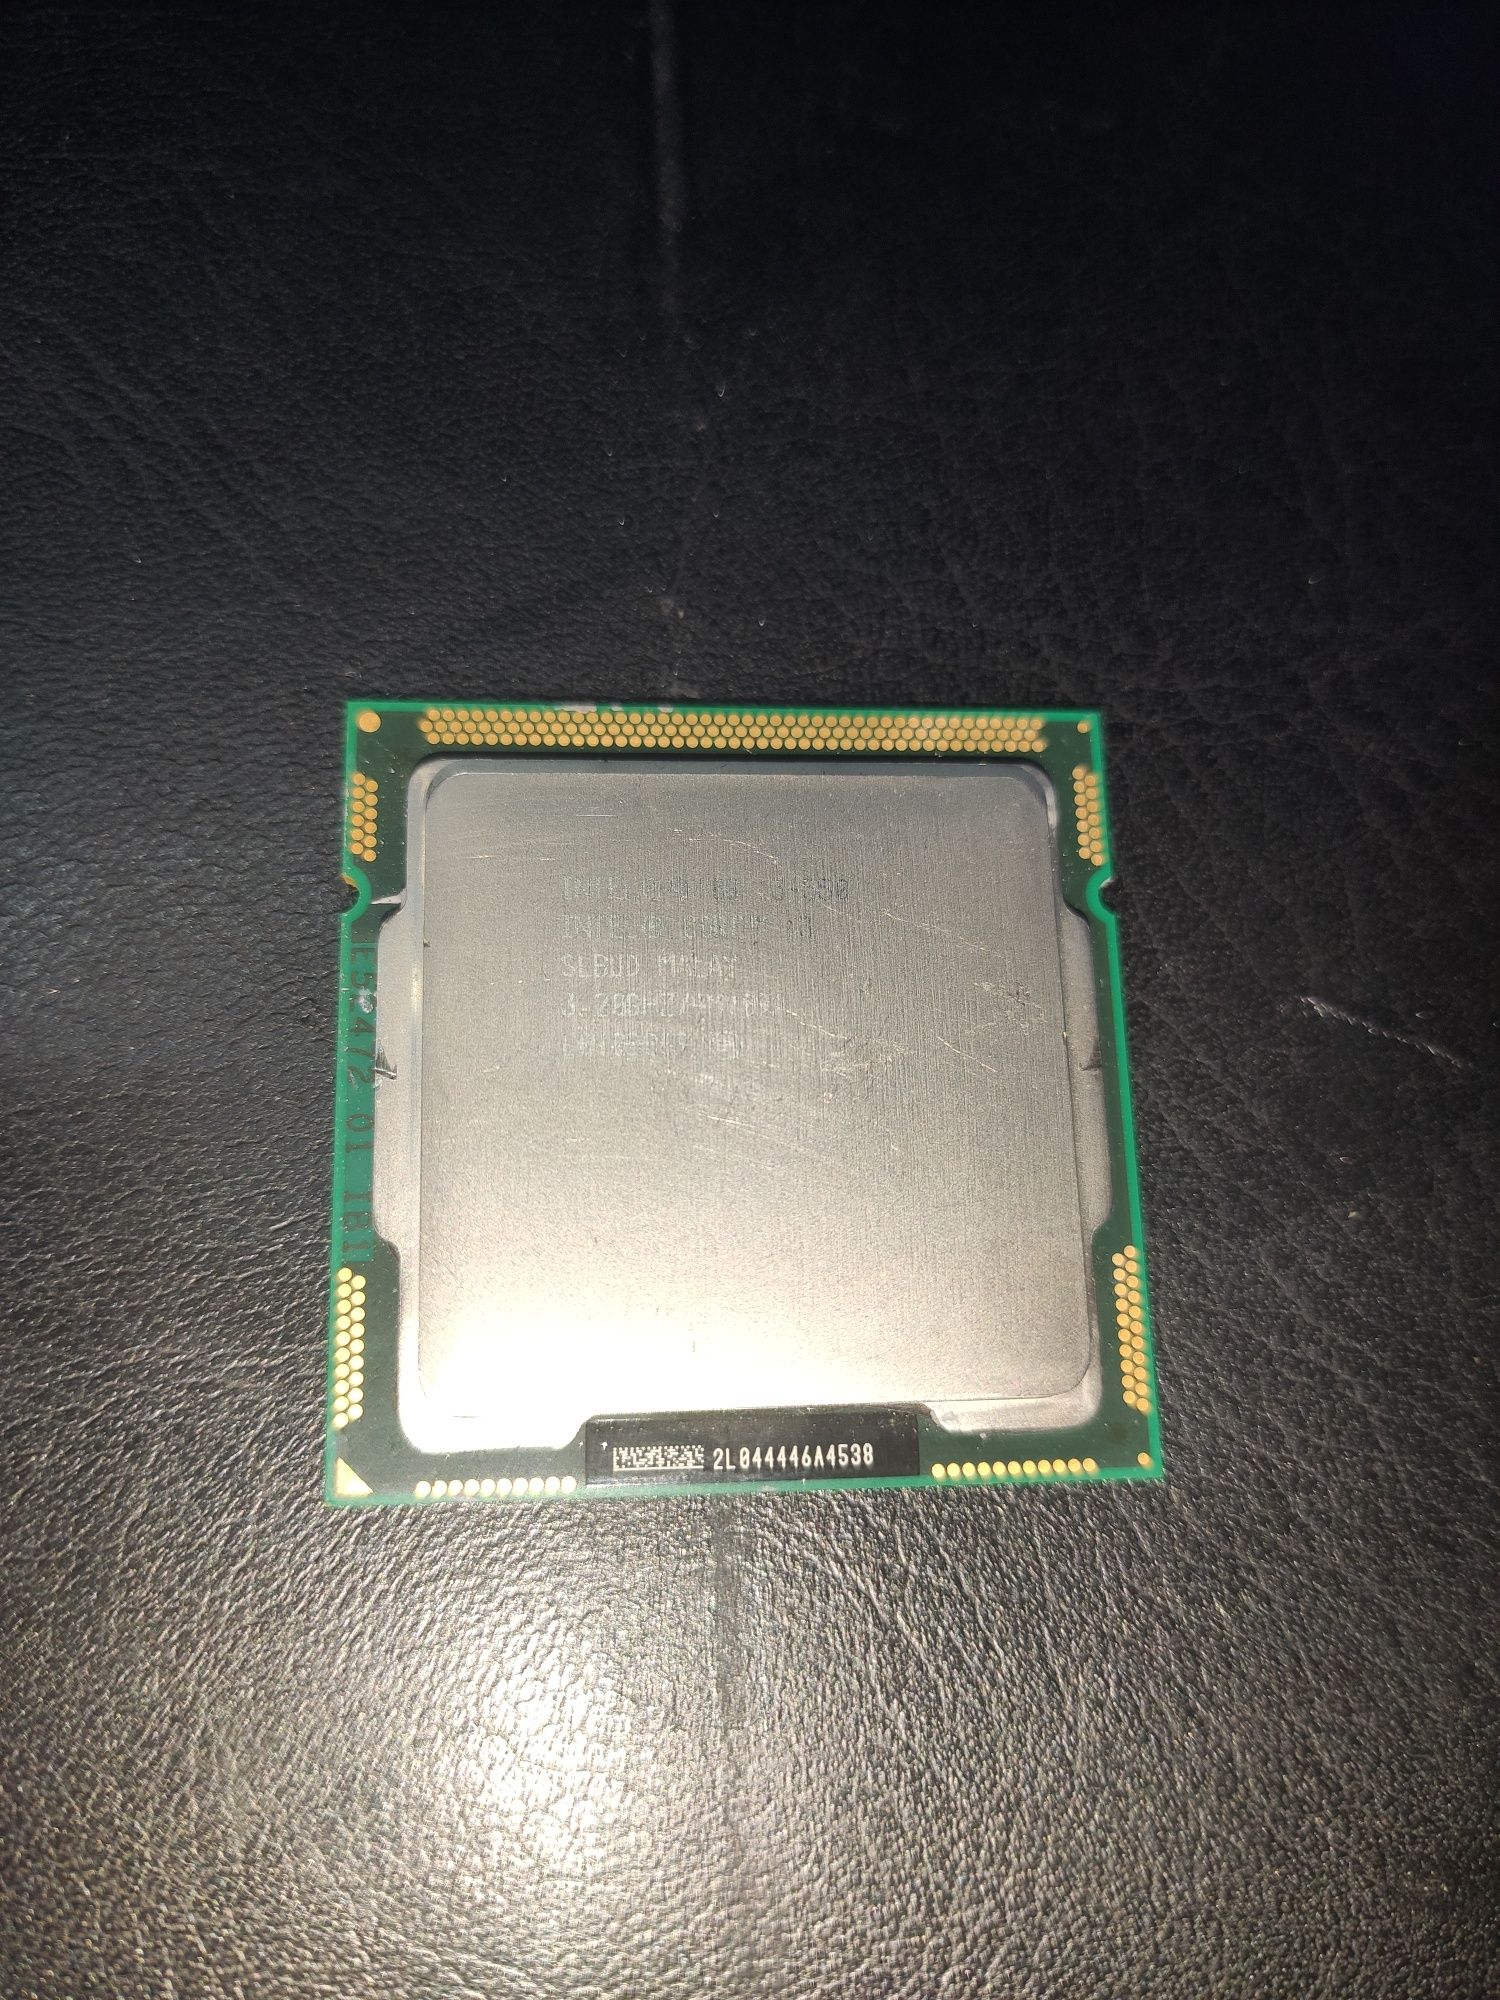 Intel i3 - 550 3.20GHz/ 4M/ 09A  SOCKET: LGA1156